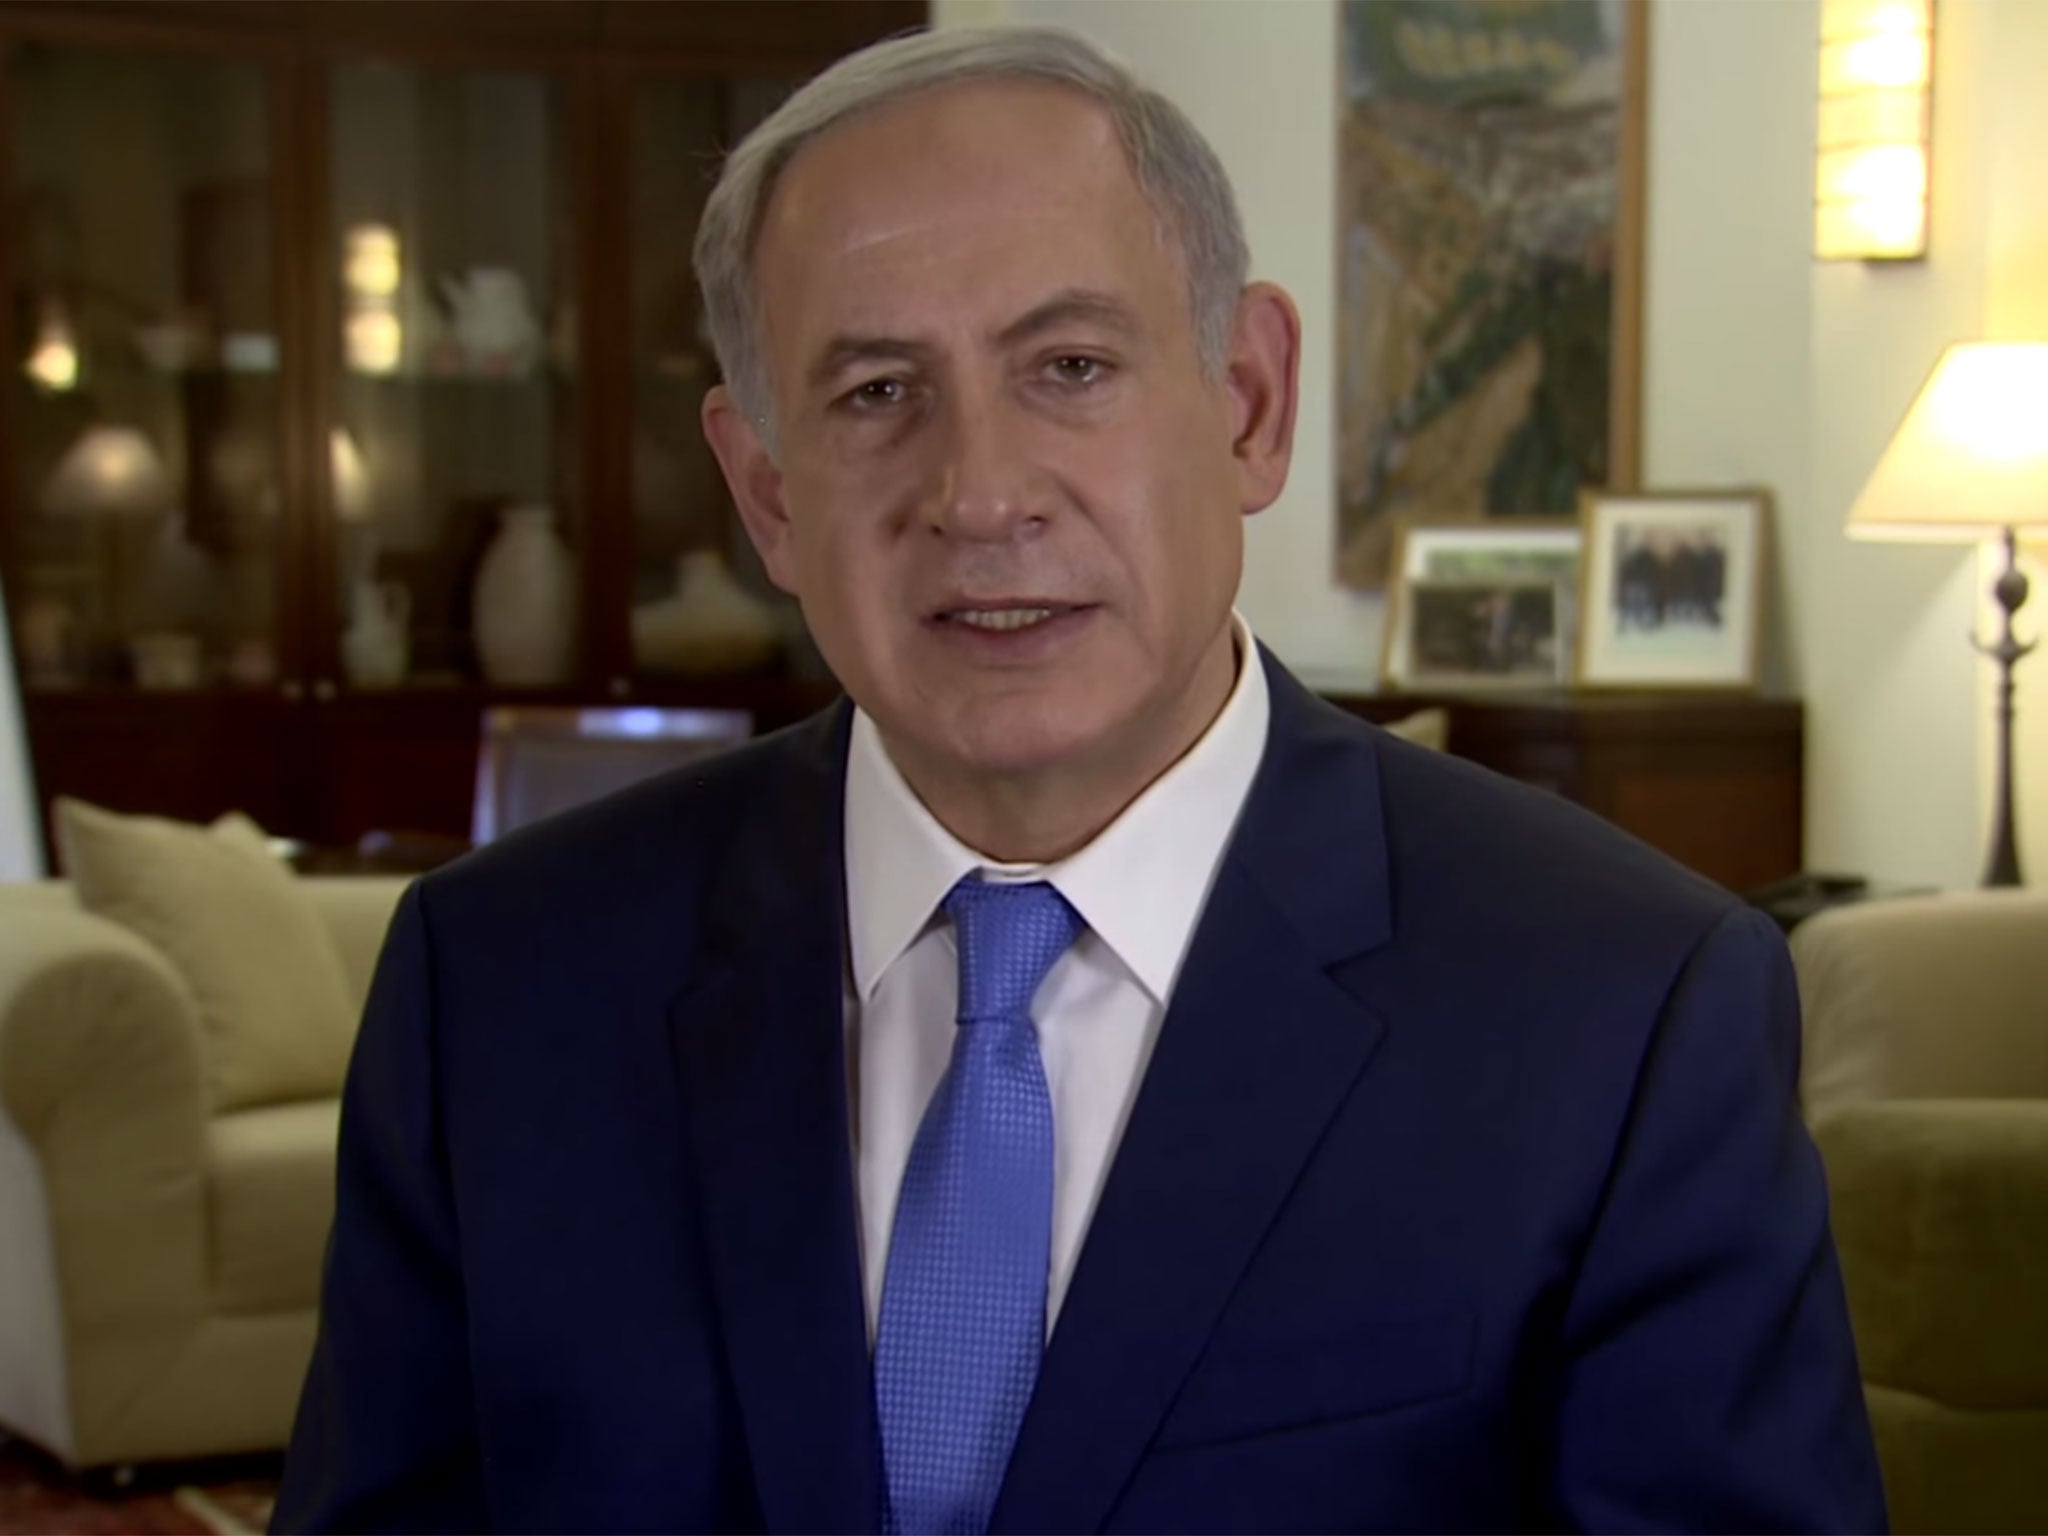 Benjamin Netanyahu delivers a Rosh Hashanah address in which he slams Israel's critics